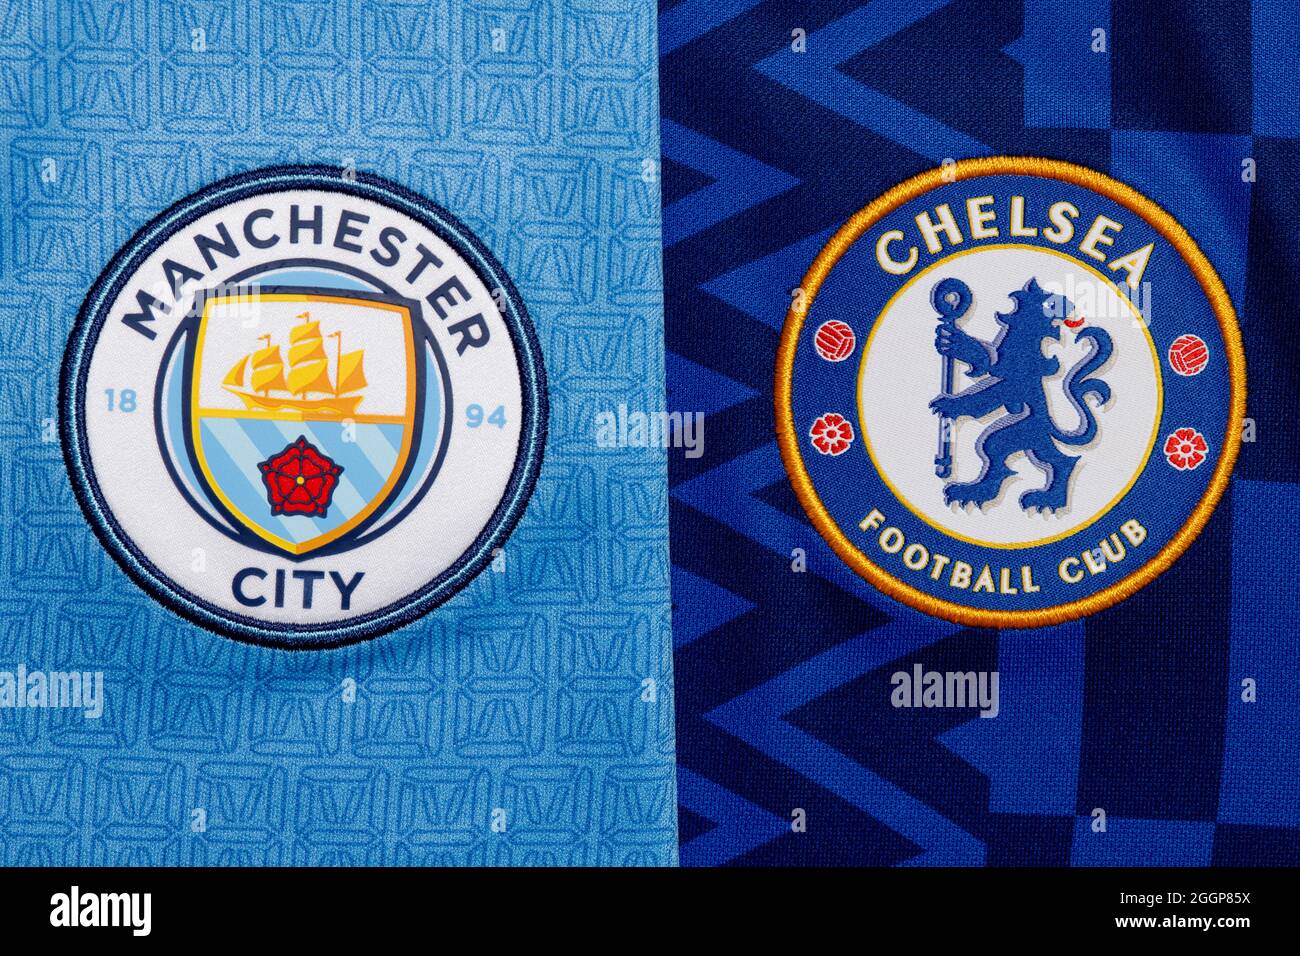 Nahaufnahme des Manchester City & Chelsea FC Vereinswappens. Stockfoto